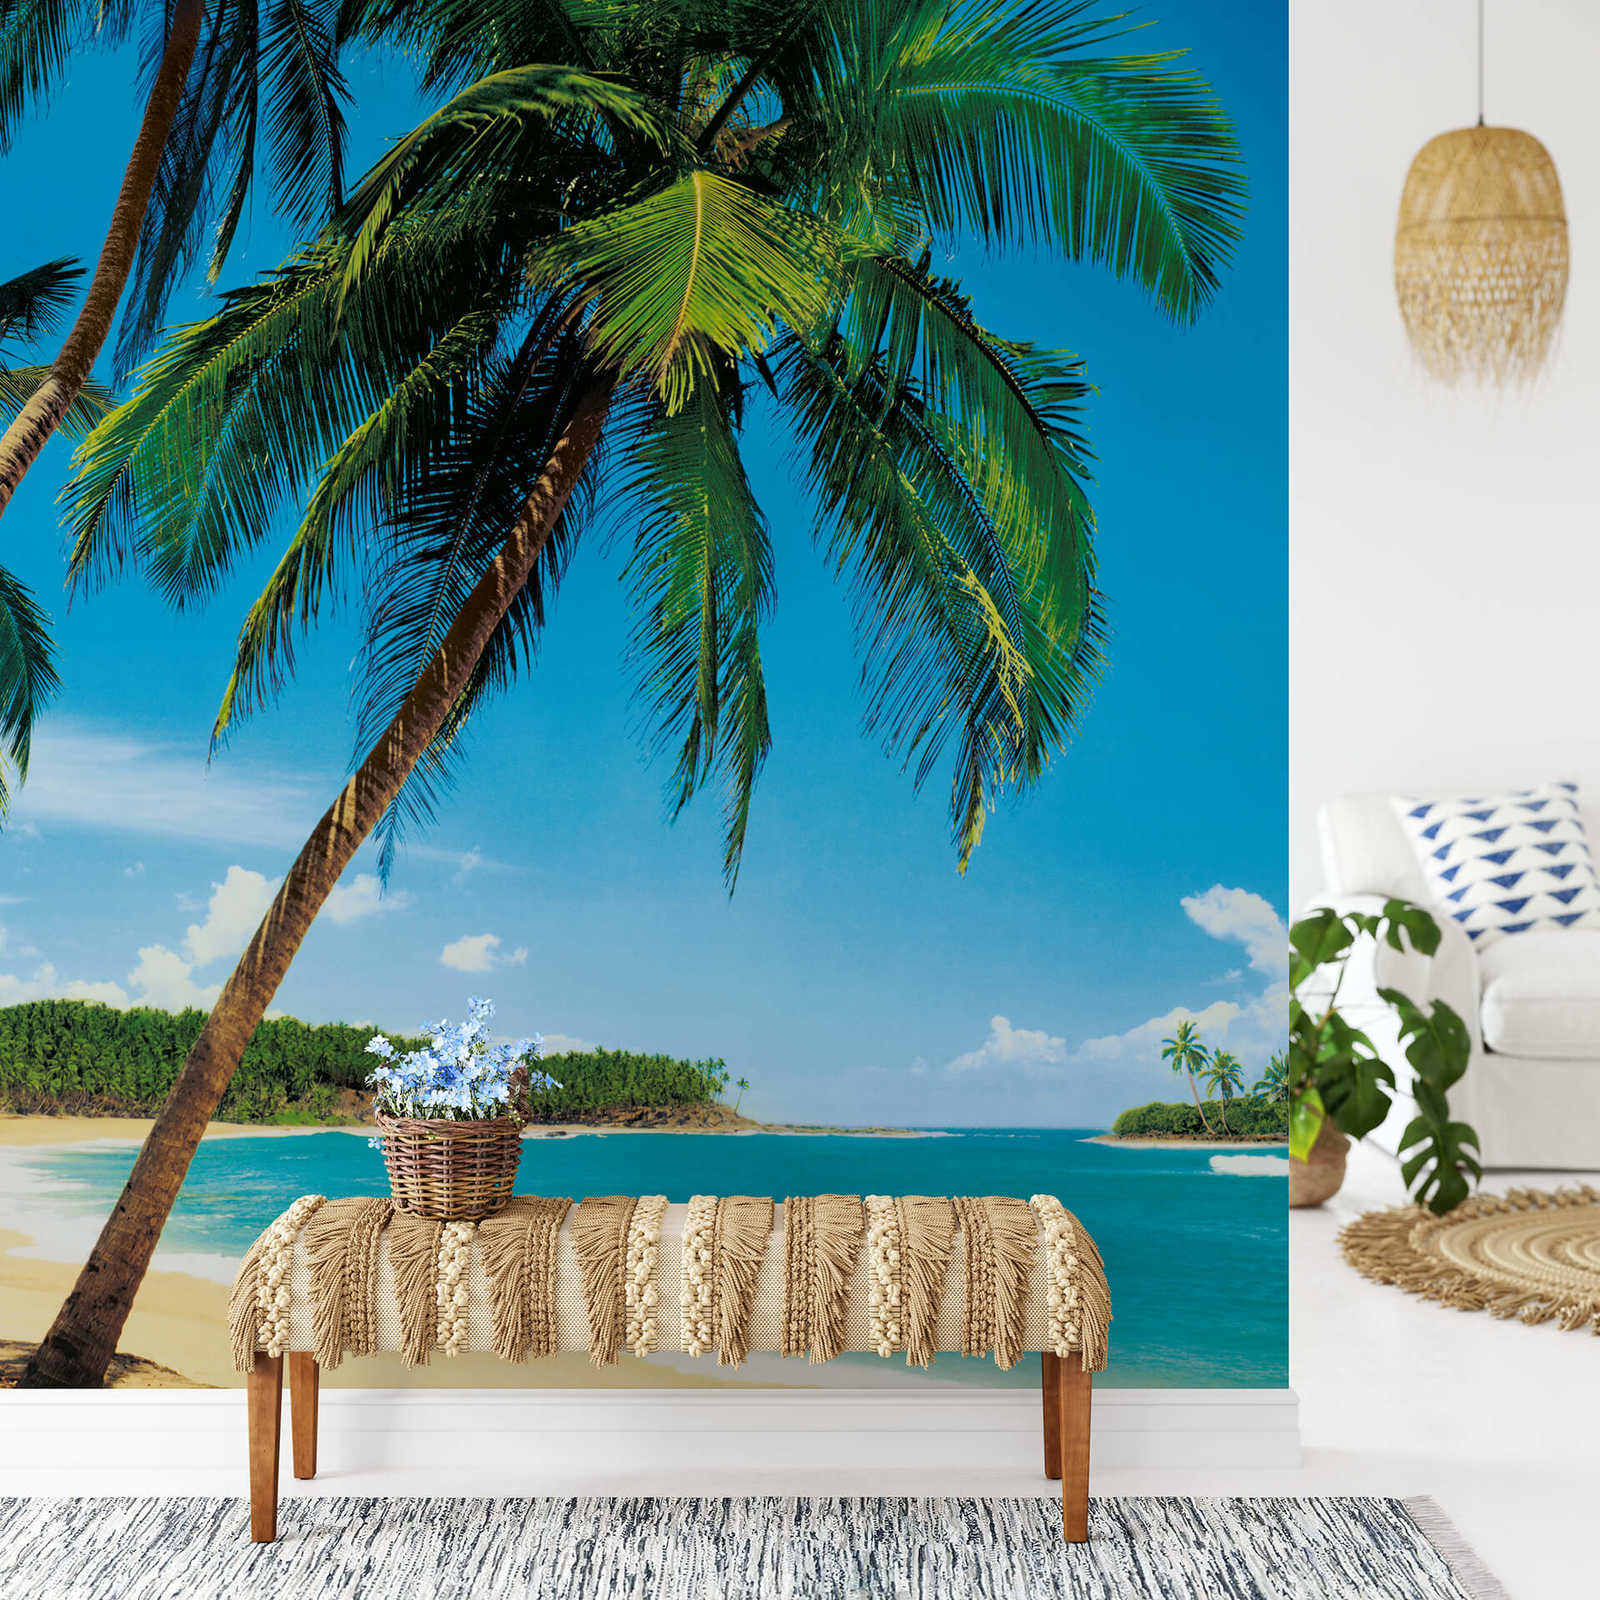             Palm beach mural with south seas view
        